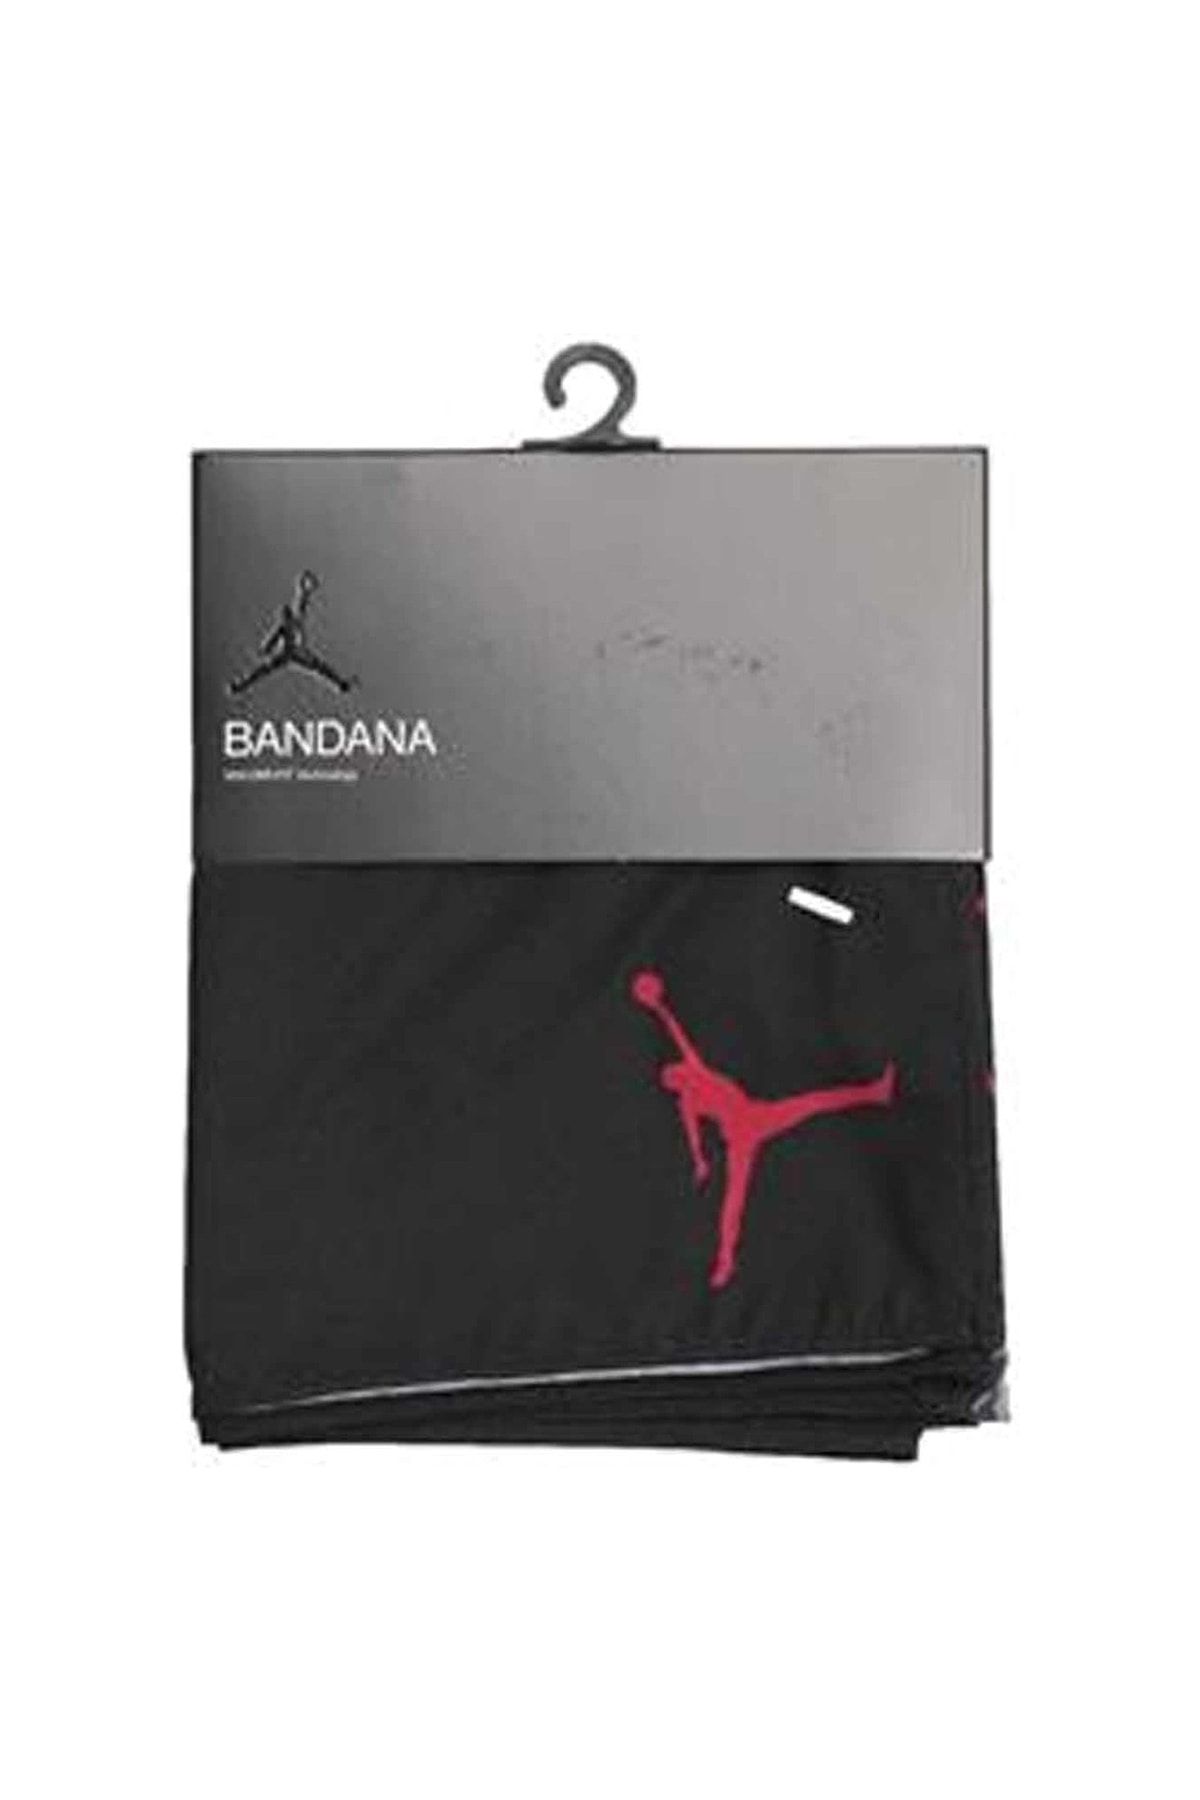 Nike Jordan Bandana Printed Flight Unisex Çok Renkli Antrenman Bandana J.100.4164.302.OS